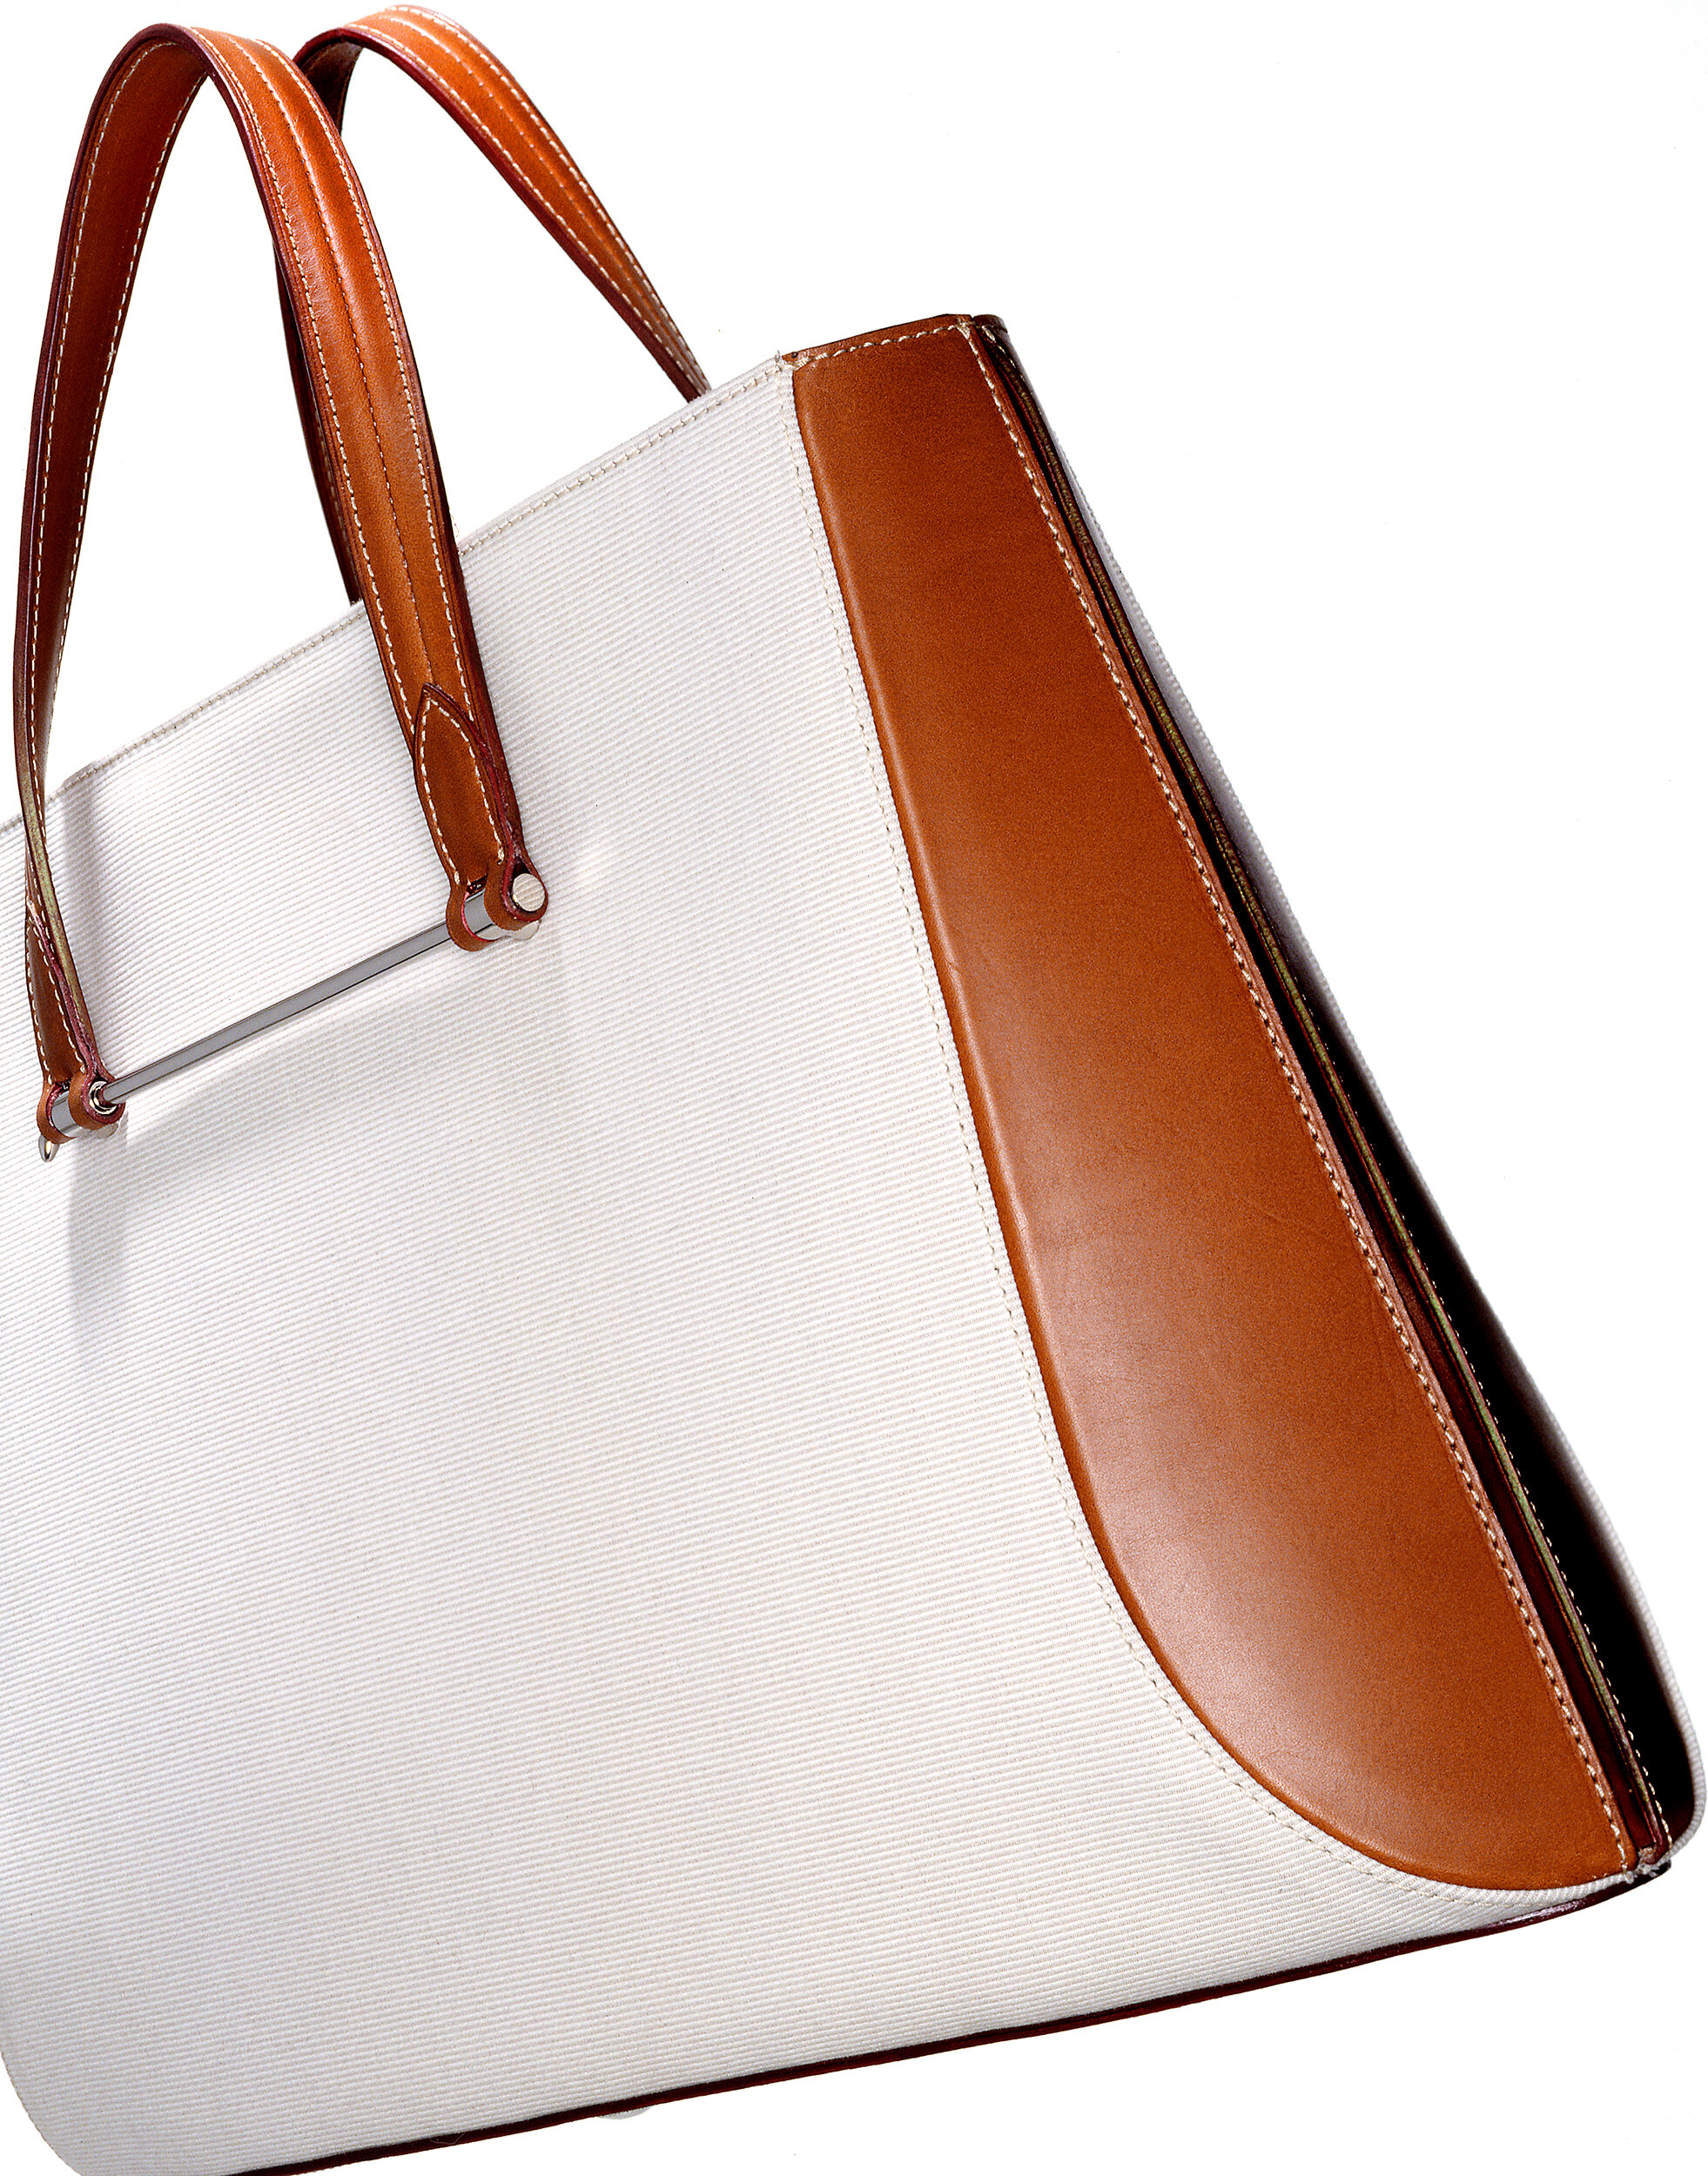  Handbag by Asprey 